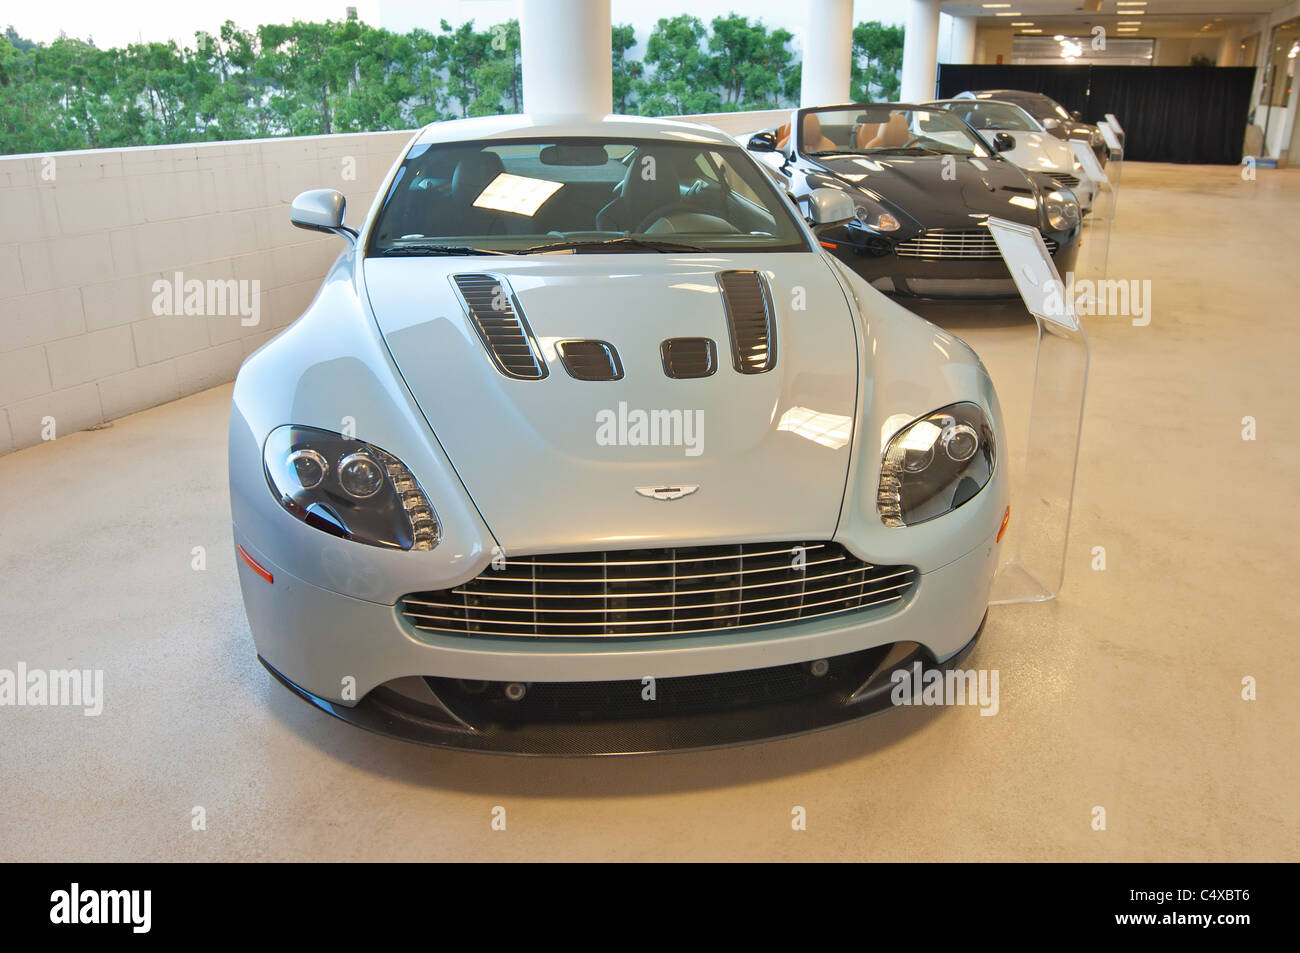 Galpin Motor's Club Aston Martin showroom. Stock Photo